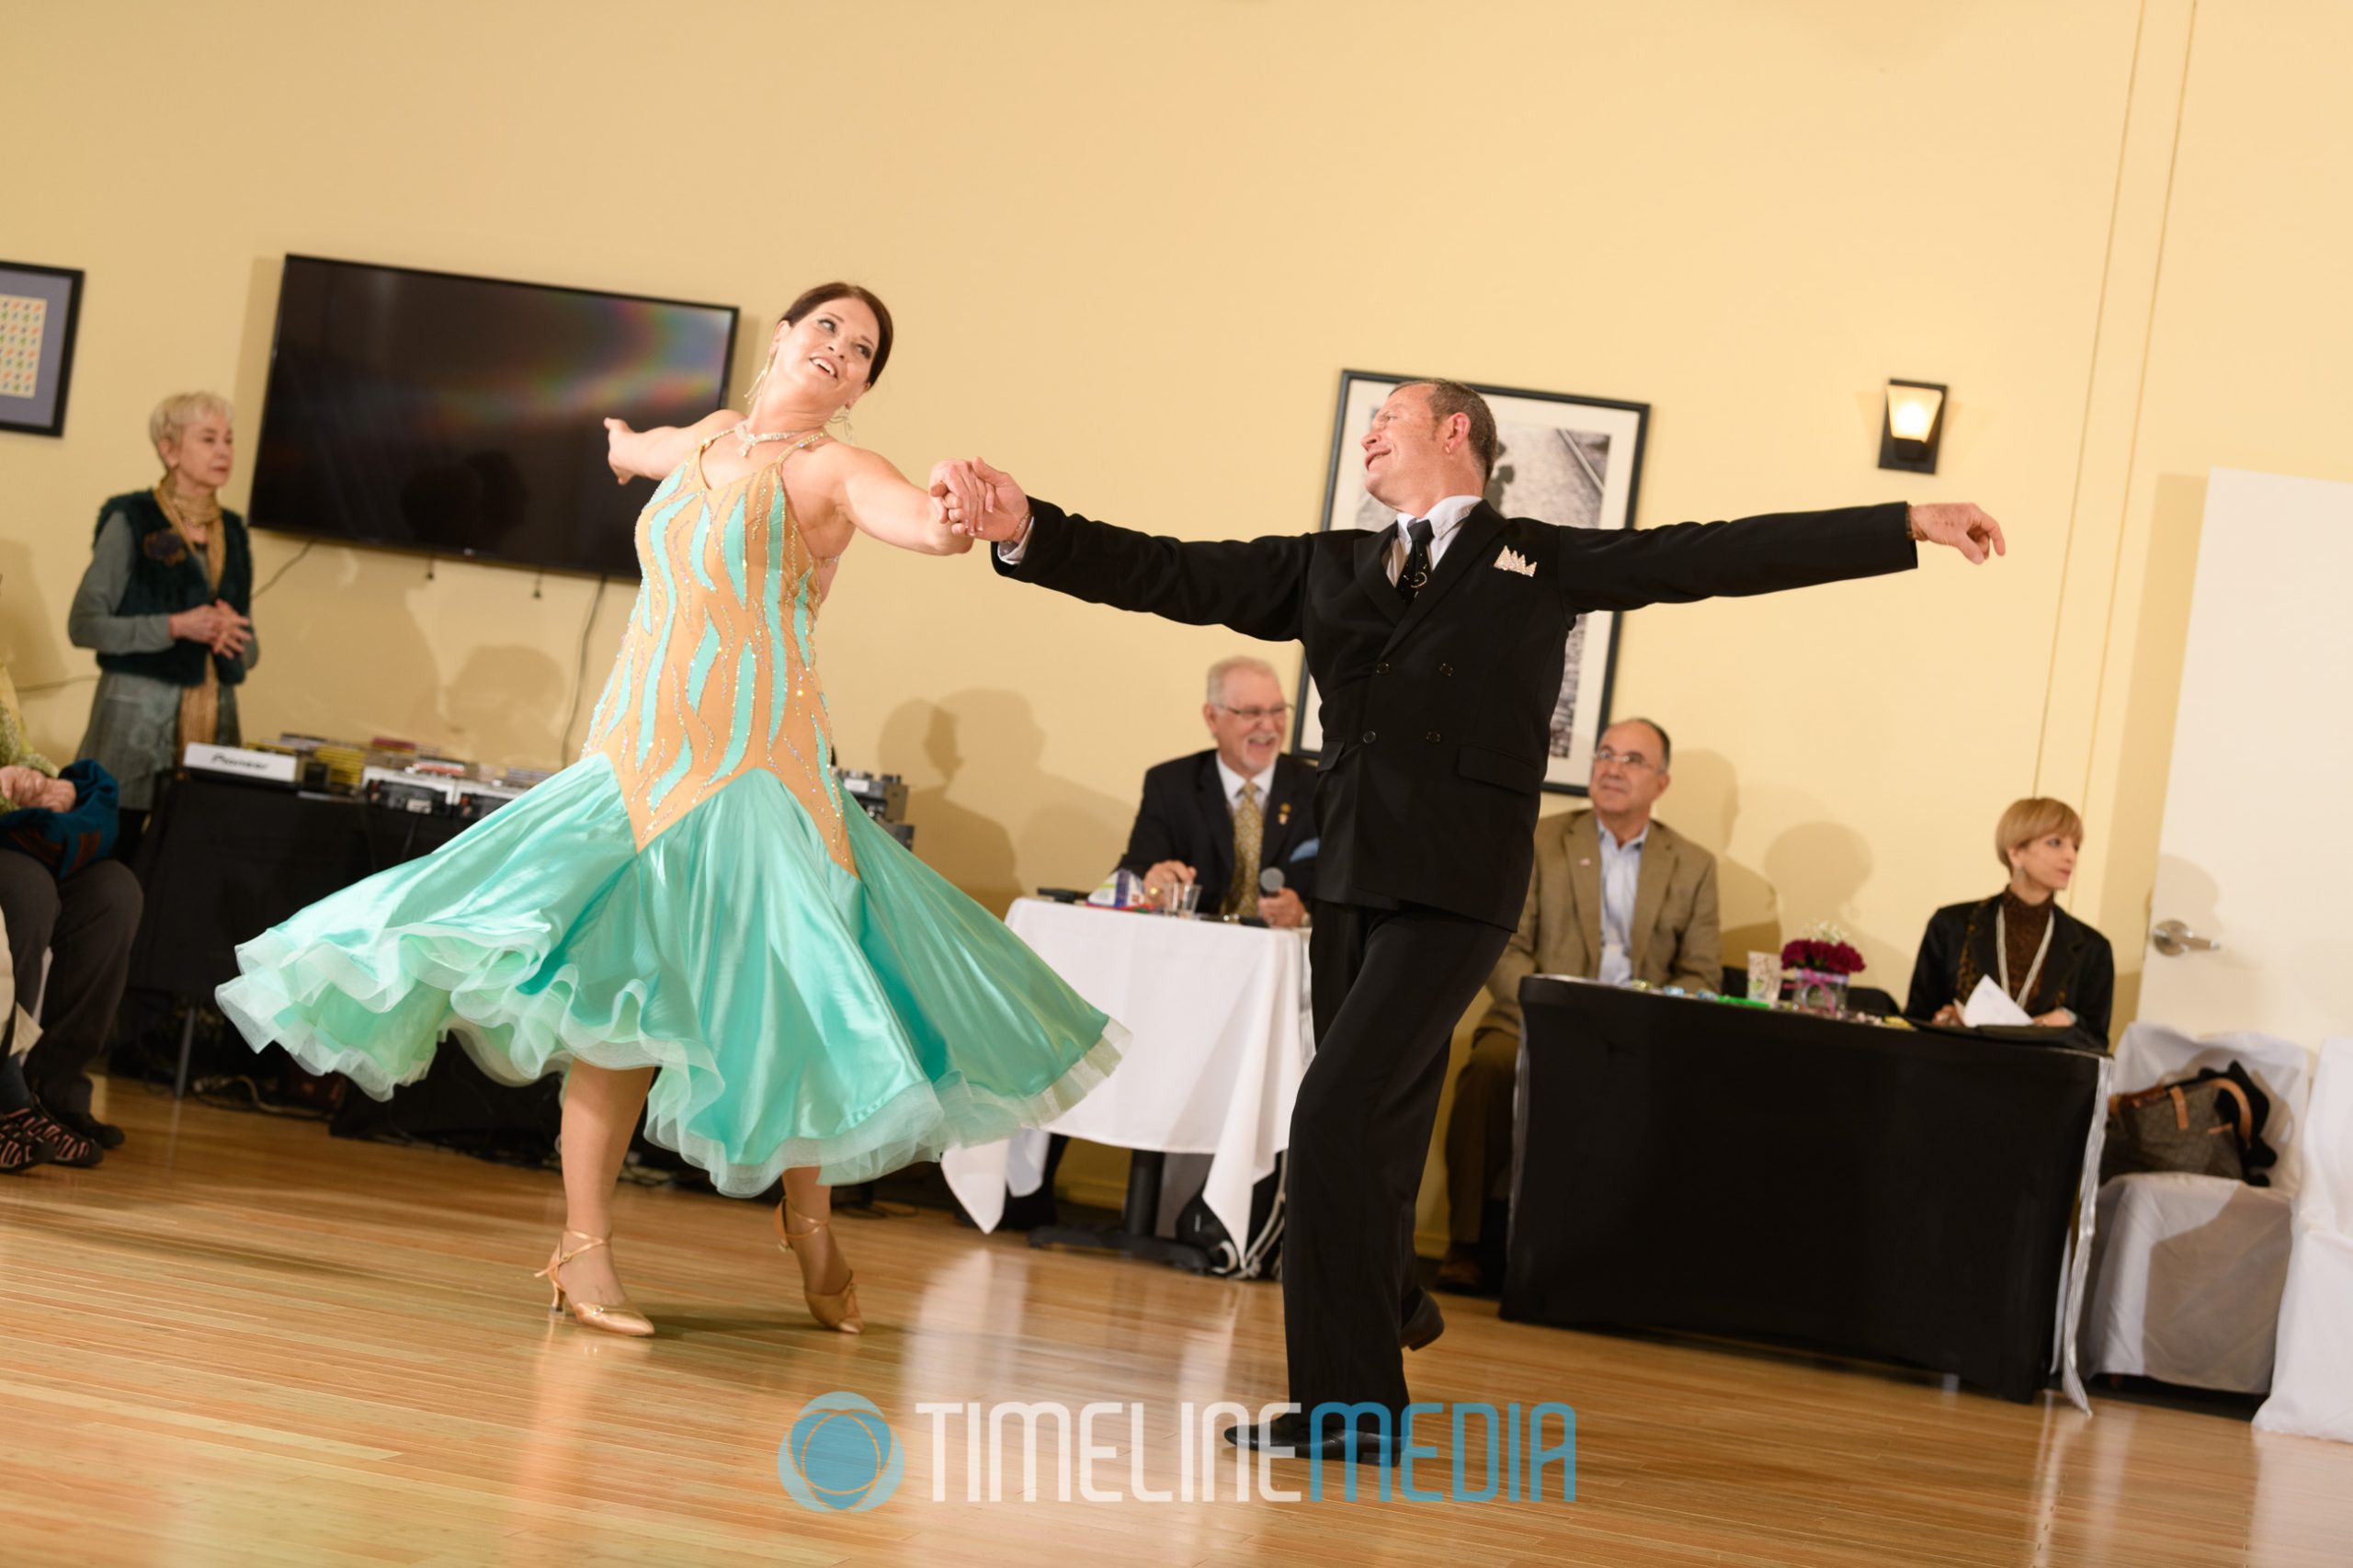 DanceSport VA at River City Ballroom Dance Competition ©TimeLine Media